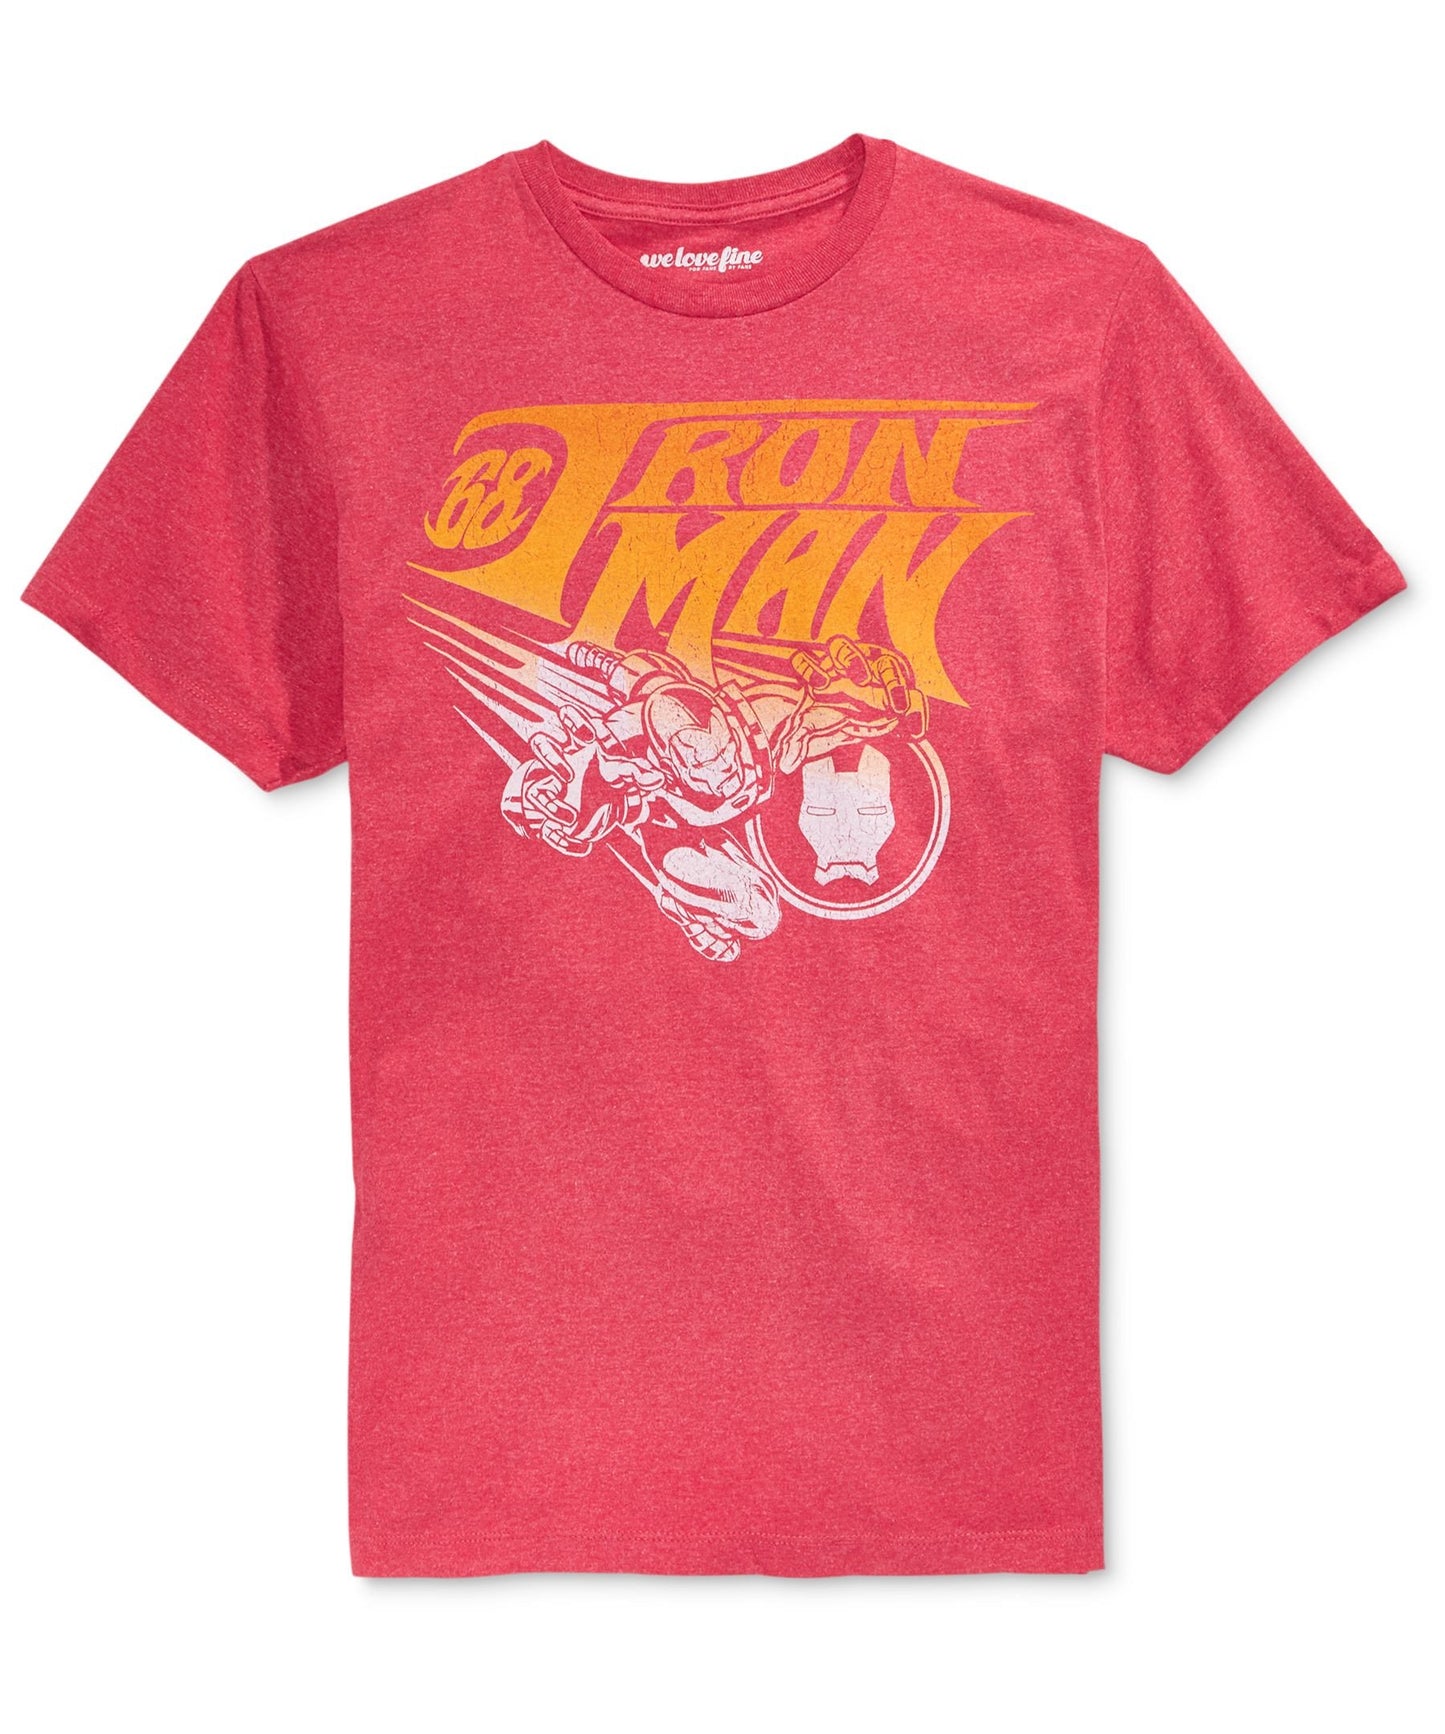 We Love Fine Iron Man Graphic T-Shirt L